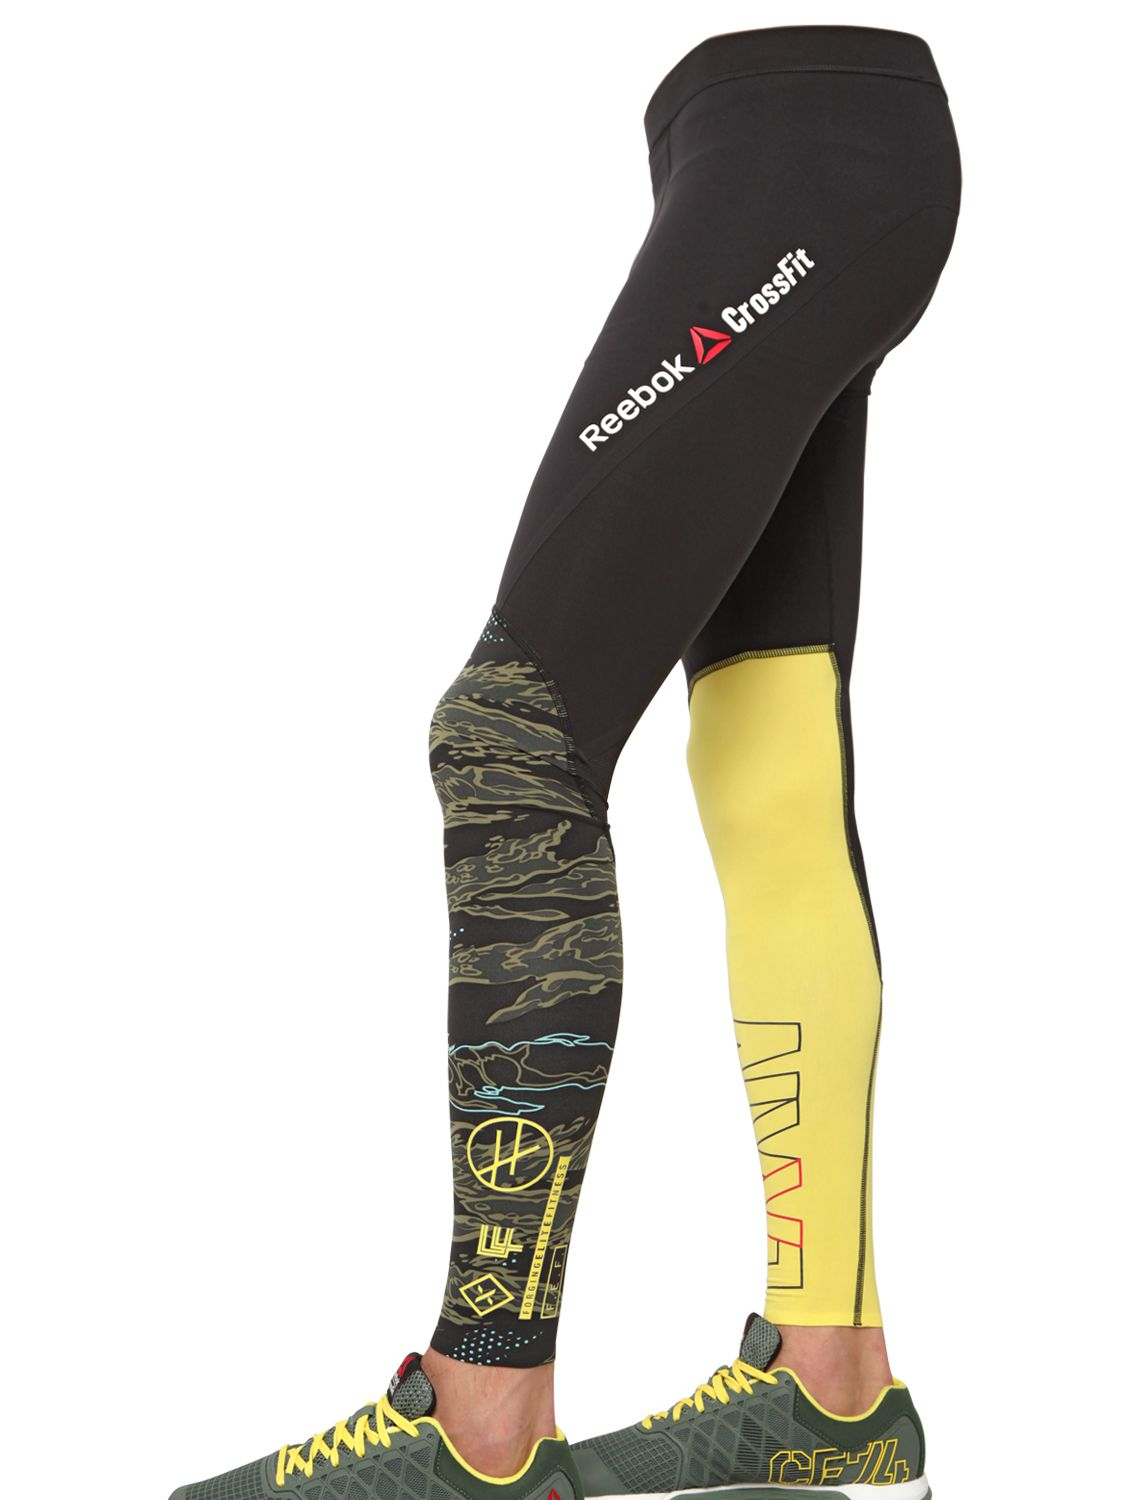 Reebok Crossfit Leggings in Black/Yellow (Black) for Men - Lyst